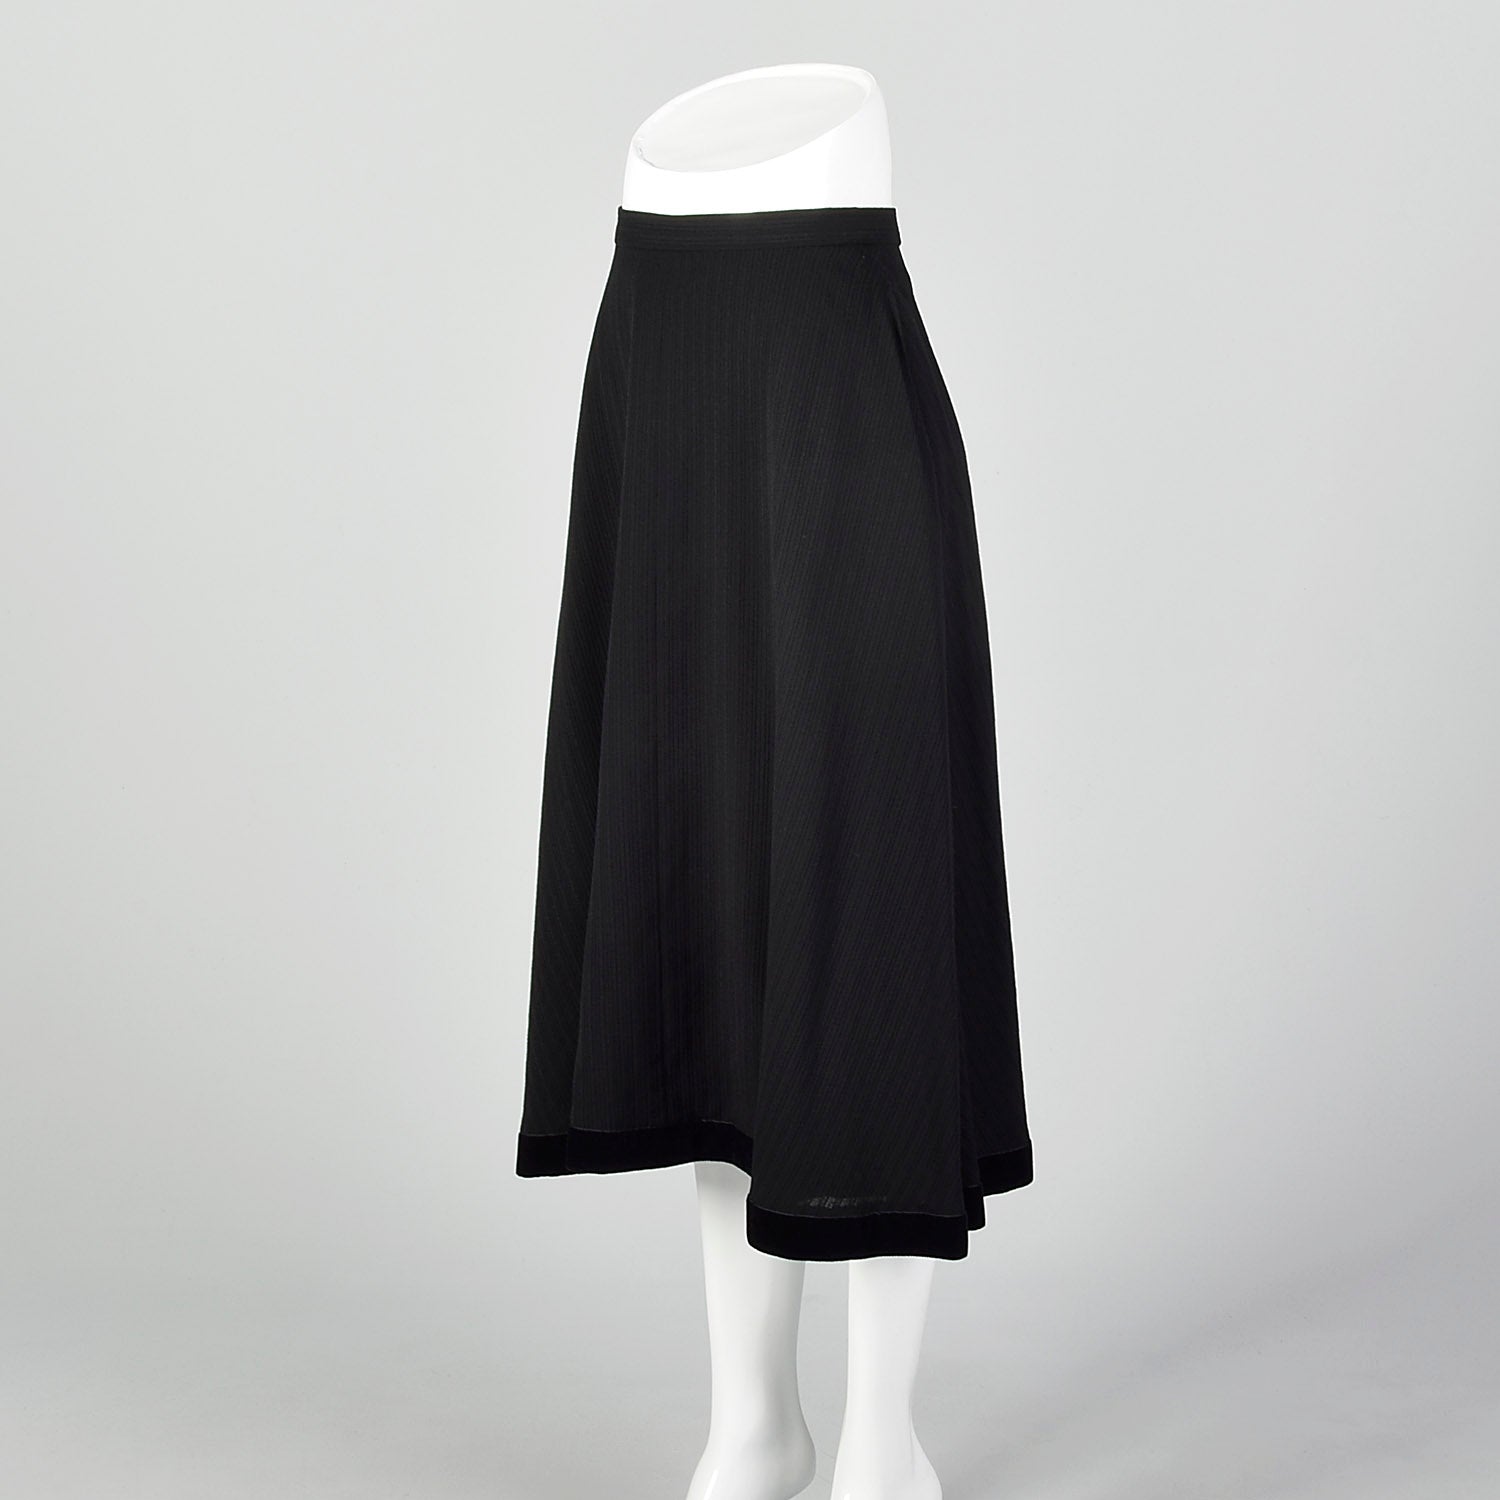 Small 1950s Black Textured Stripe Skirt